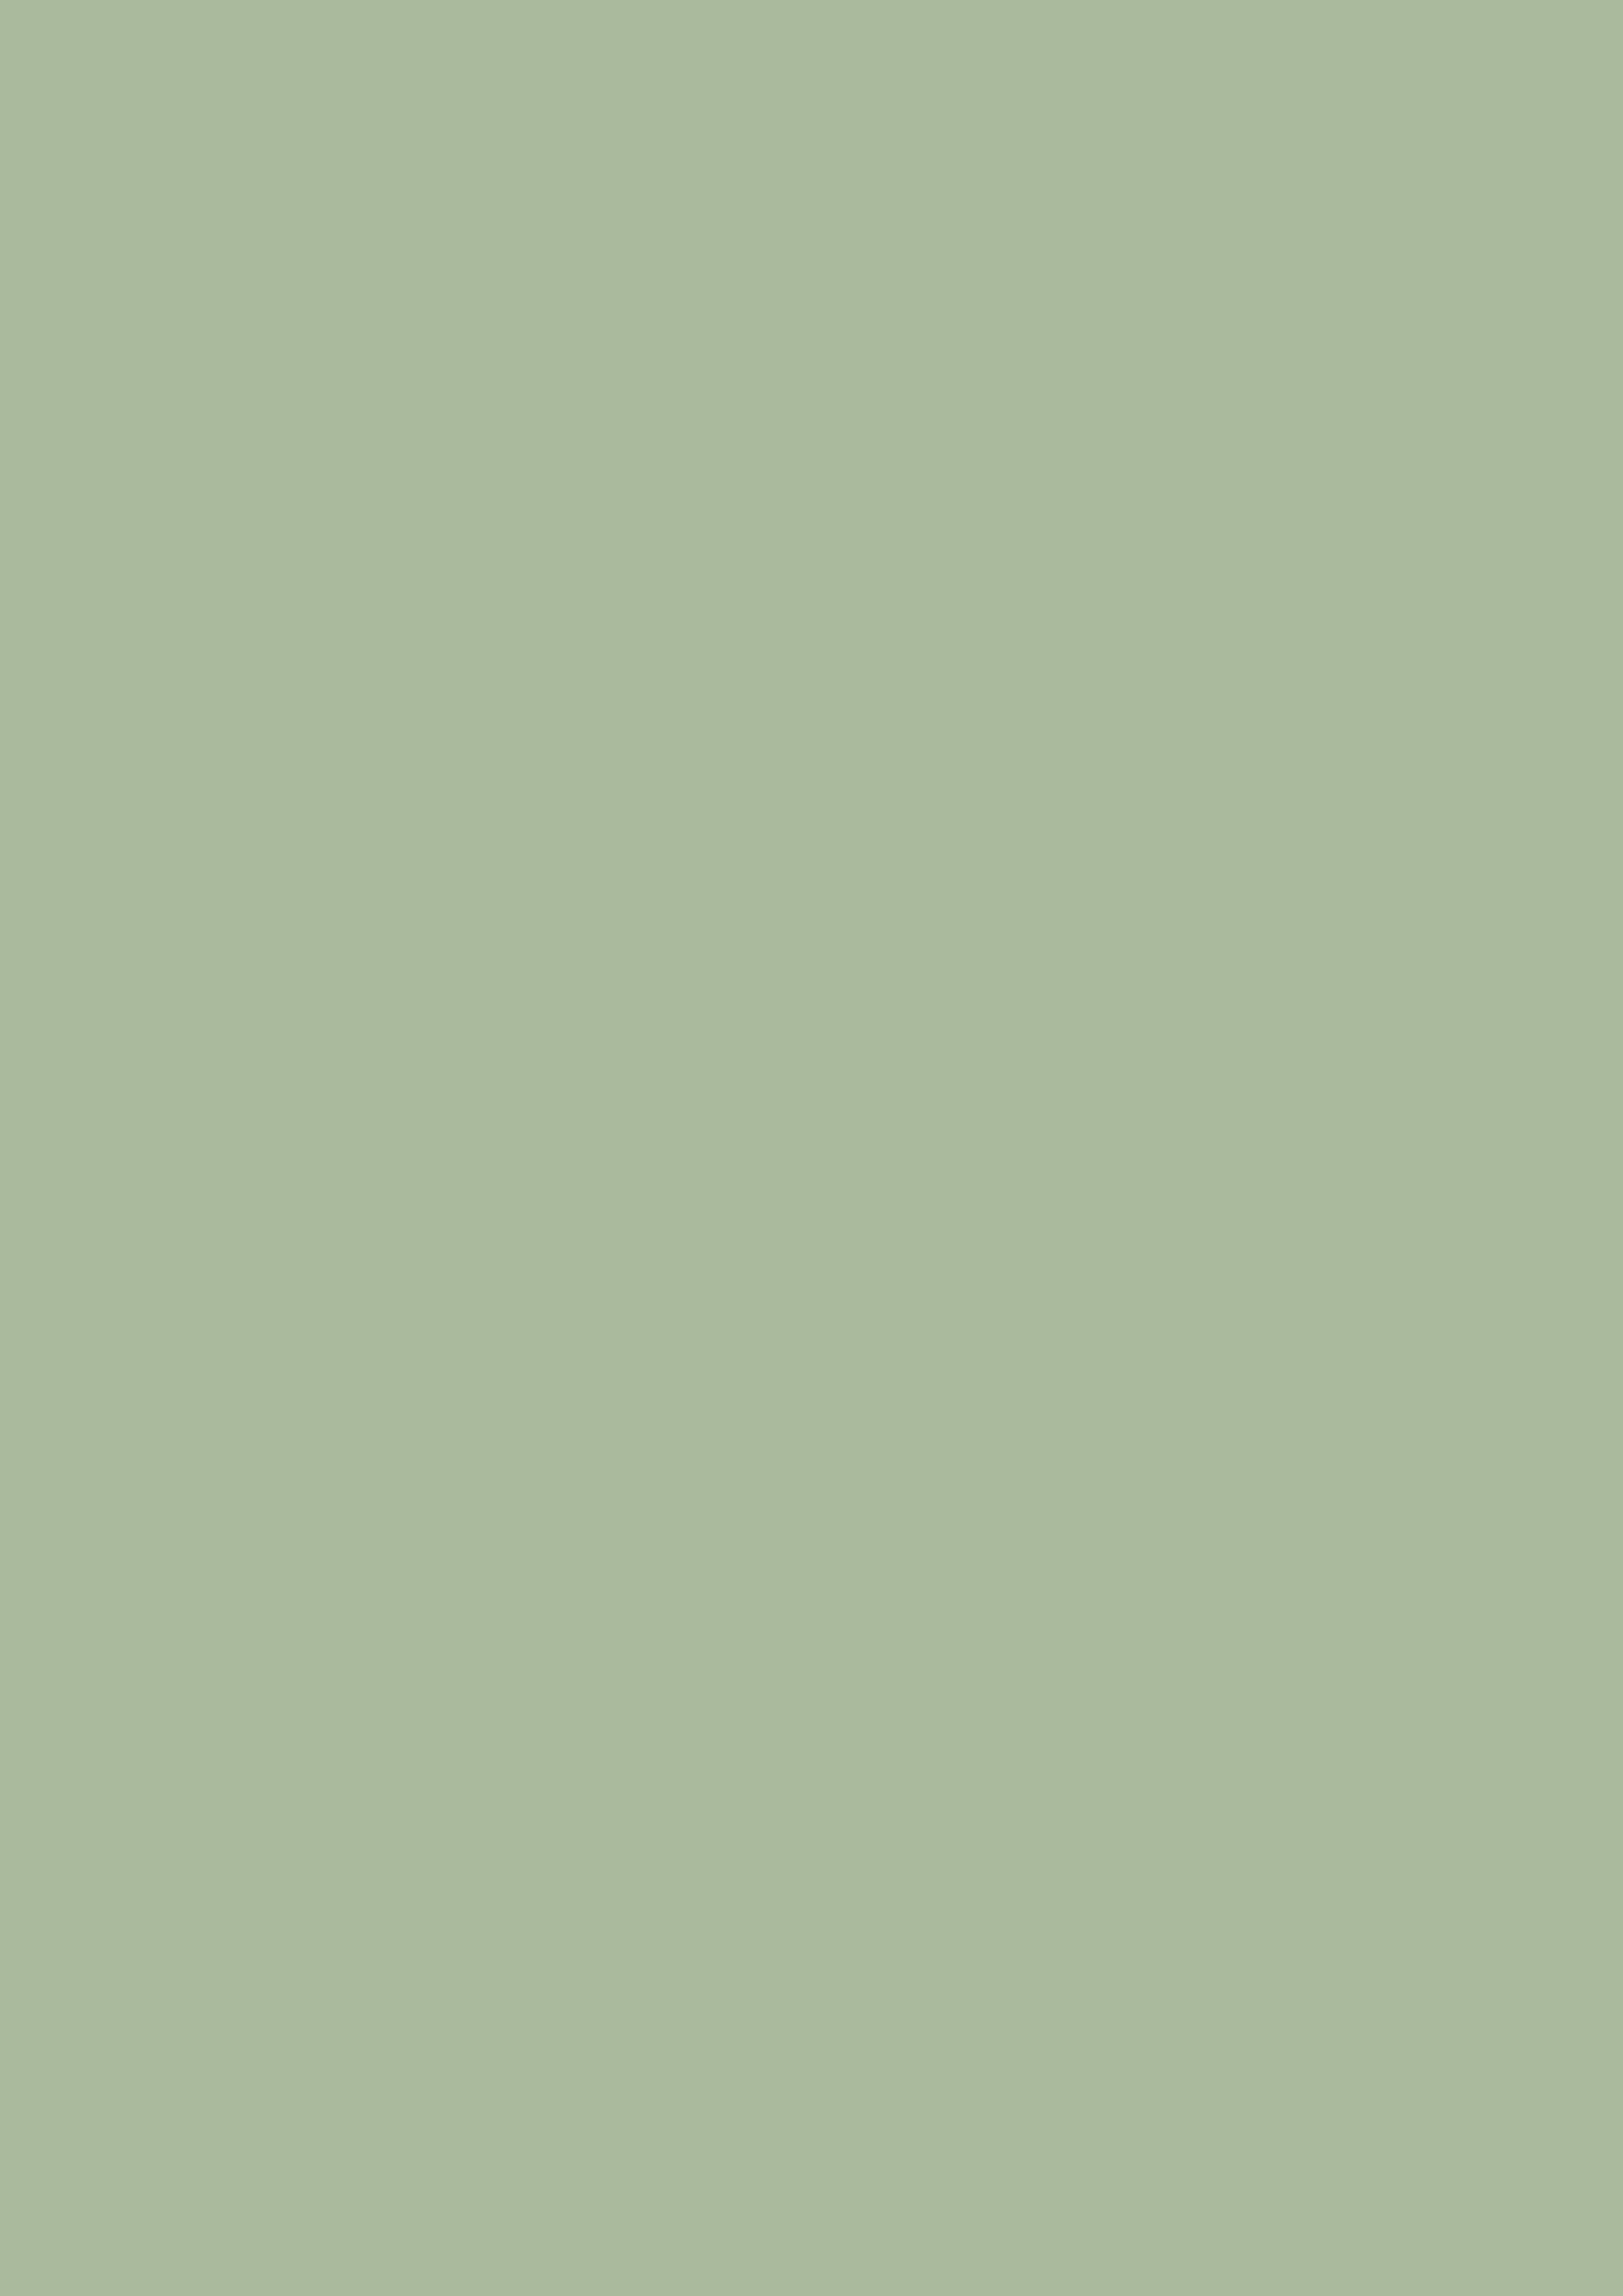 2480x3508 Laurel Green Solid Color Background